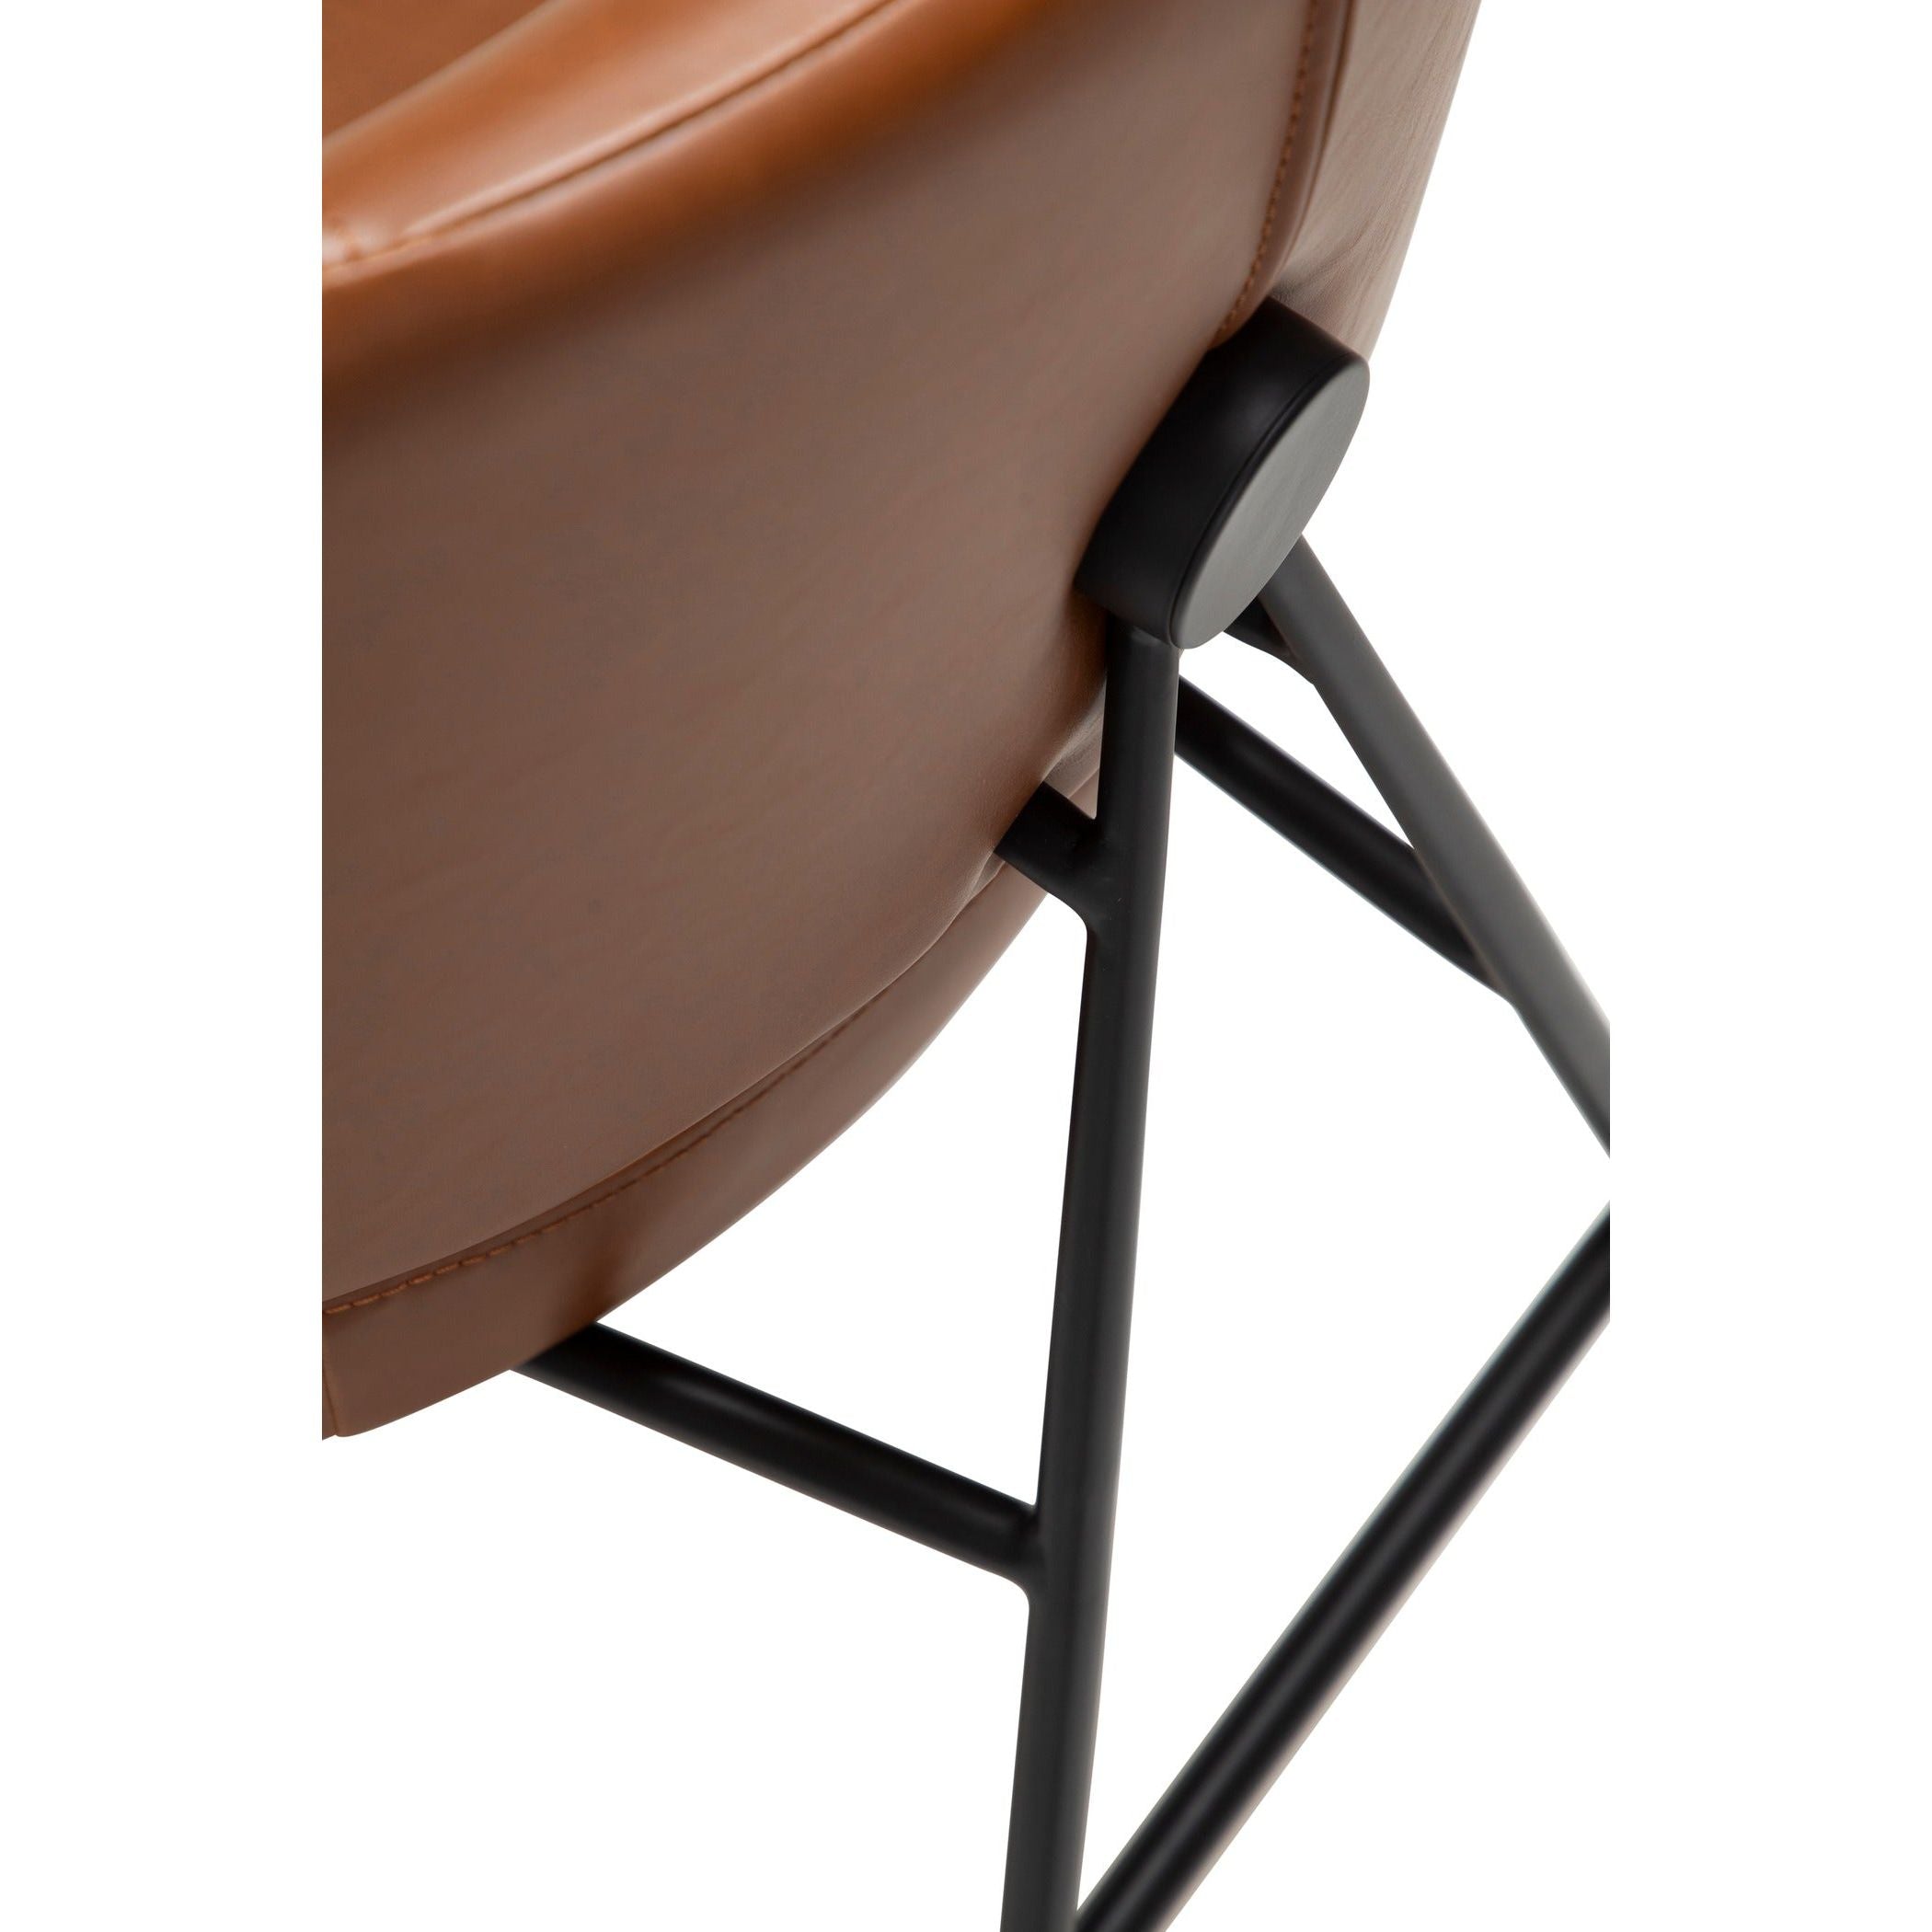 ROOST kėdė, ruda spalva